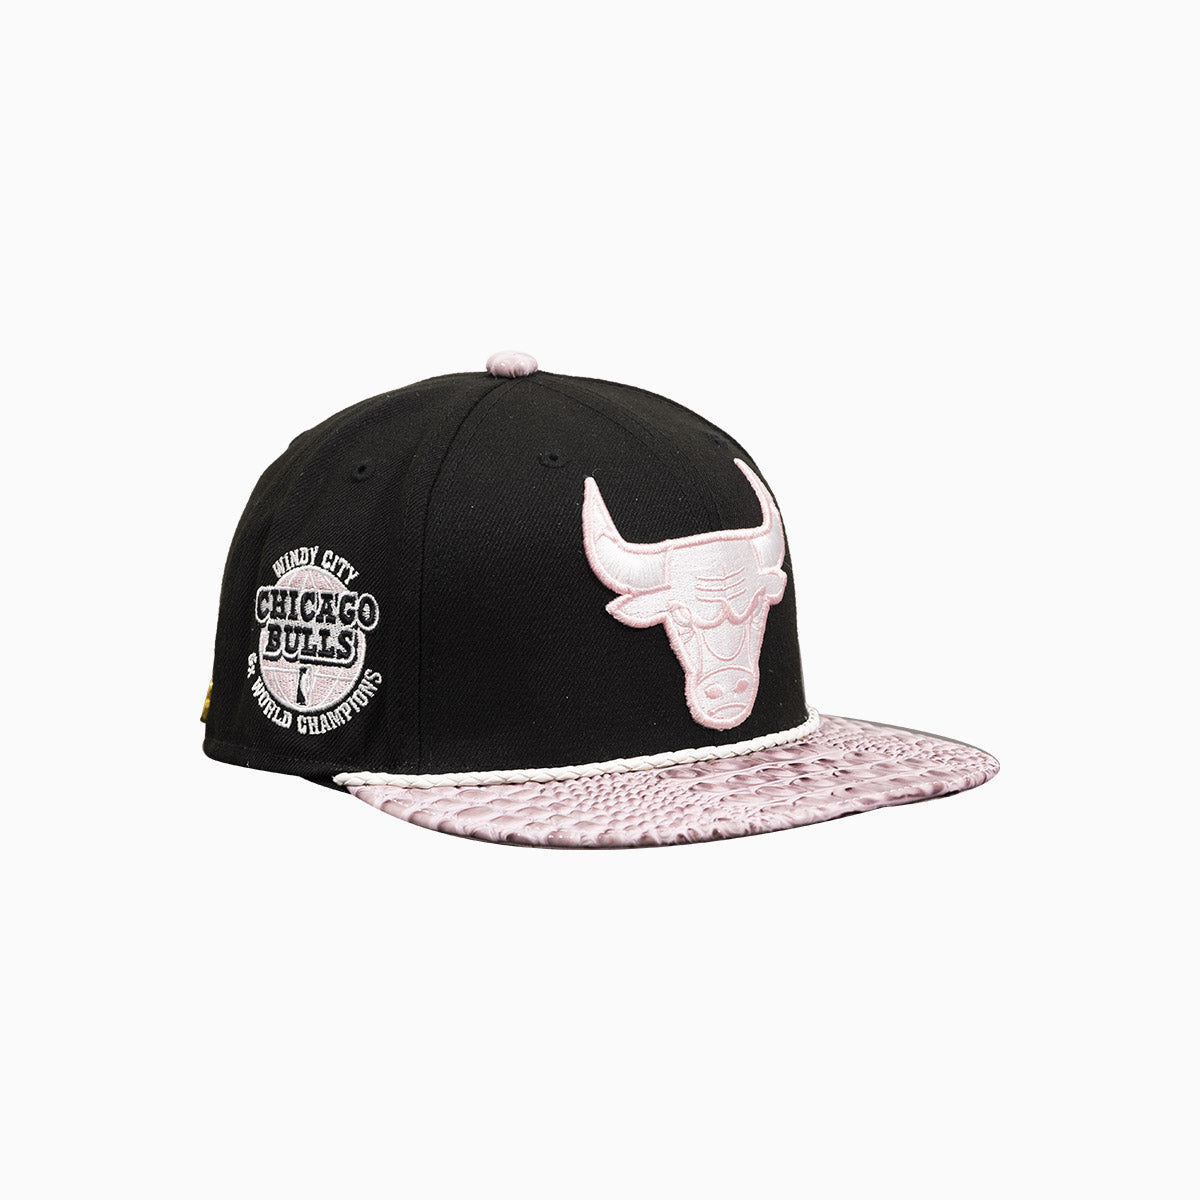 breyers-buck-50-chicago-bulls-hat-with-leather-visor-breyers-tcbh-black-pink